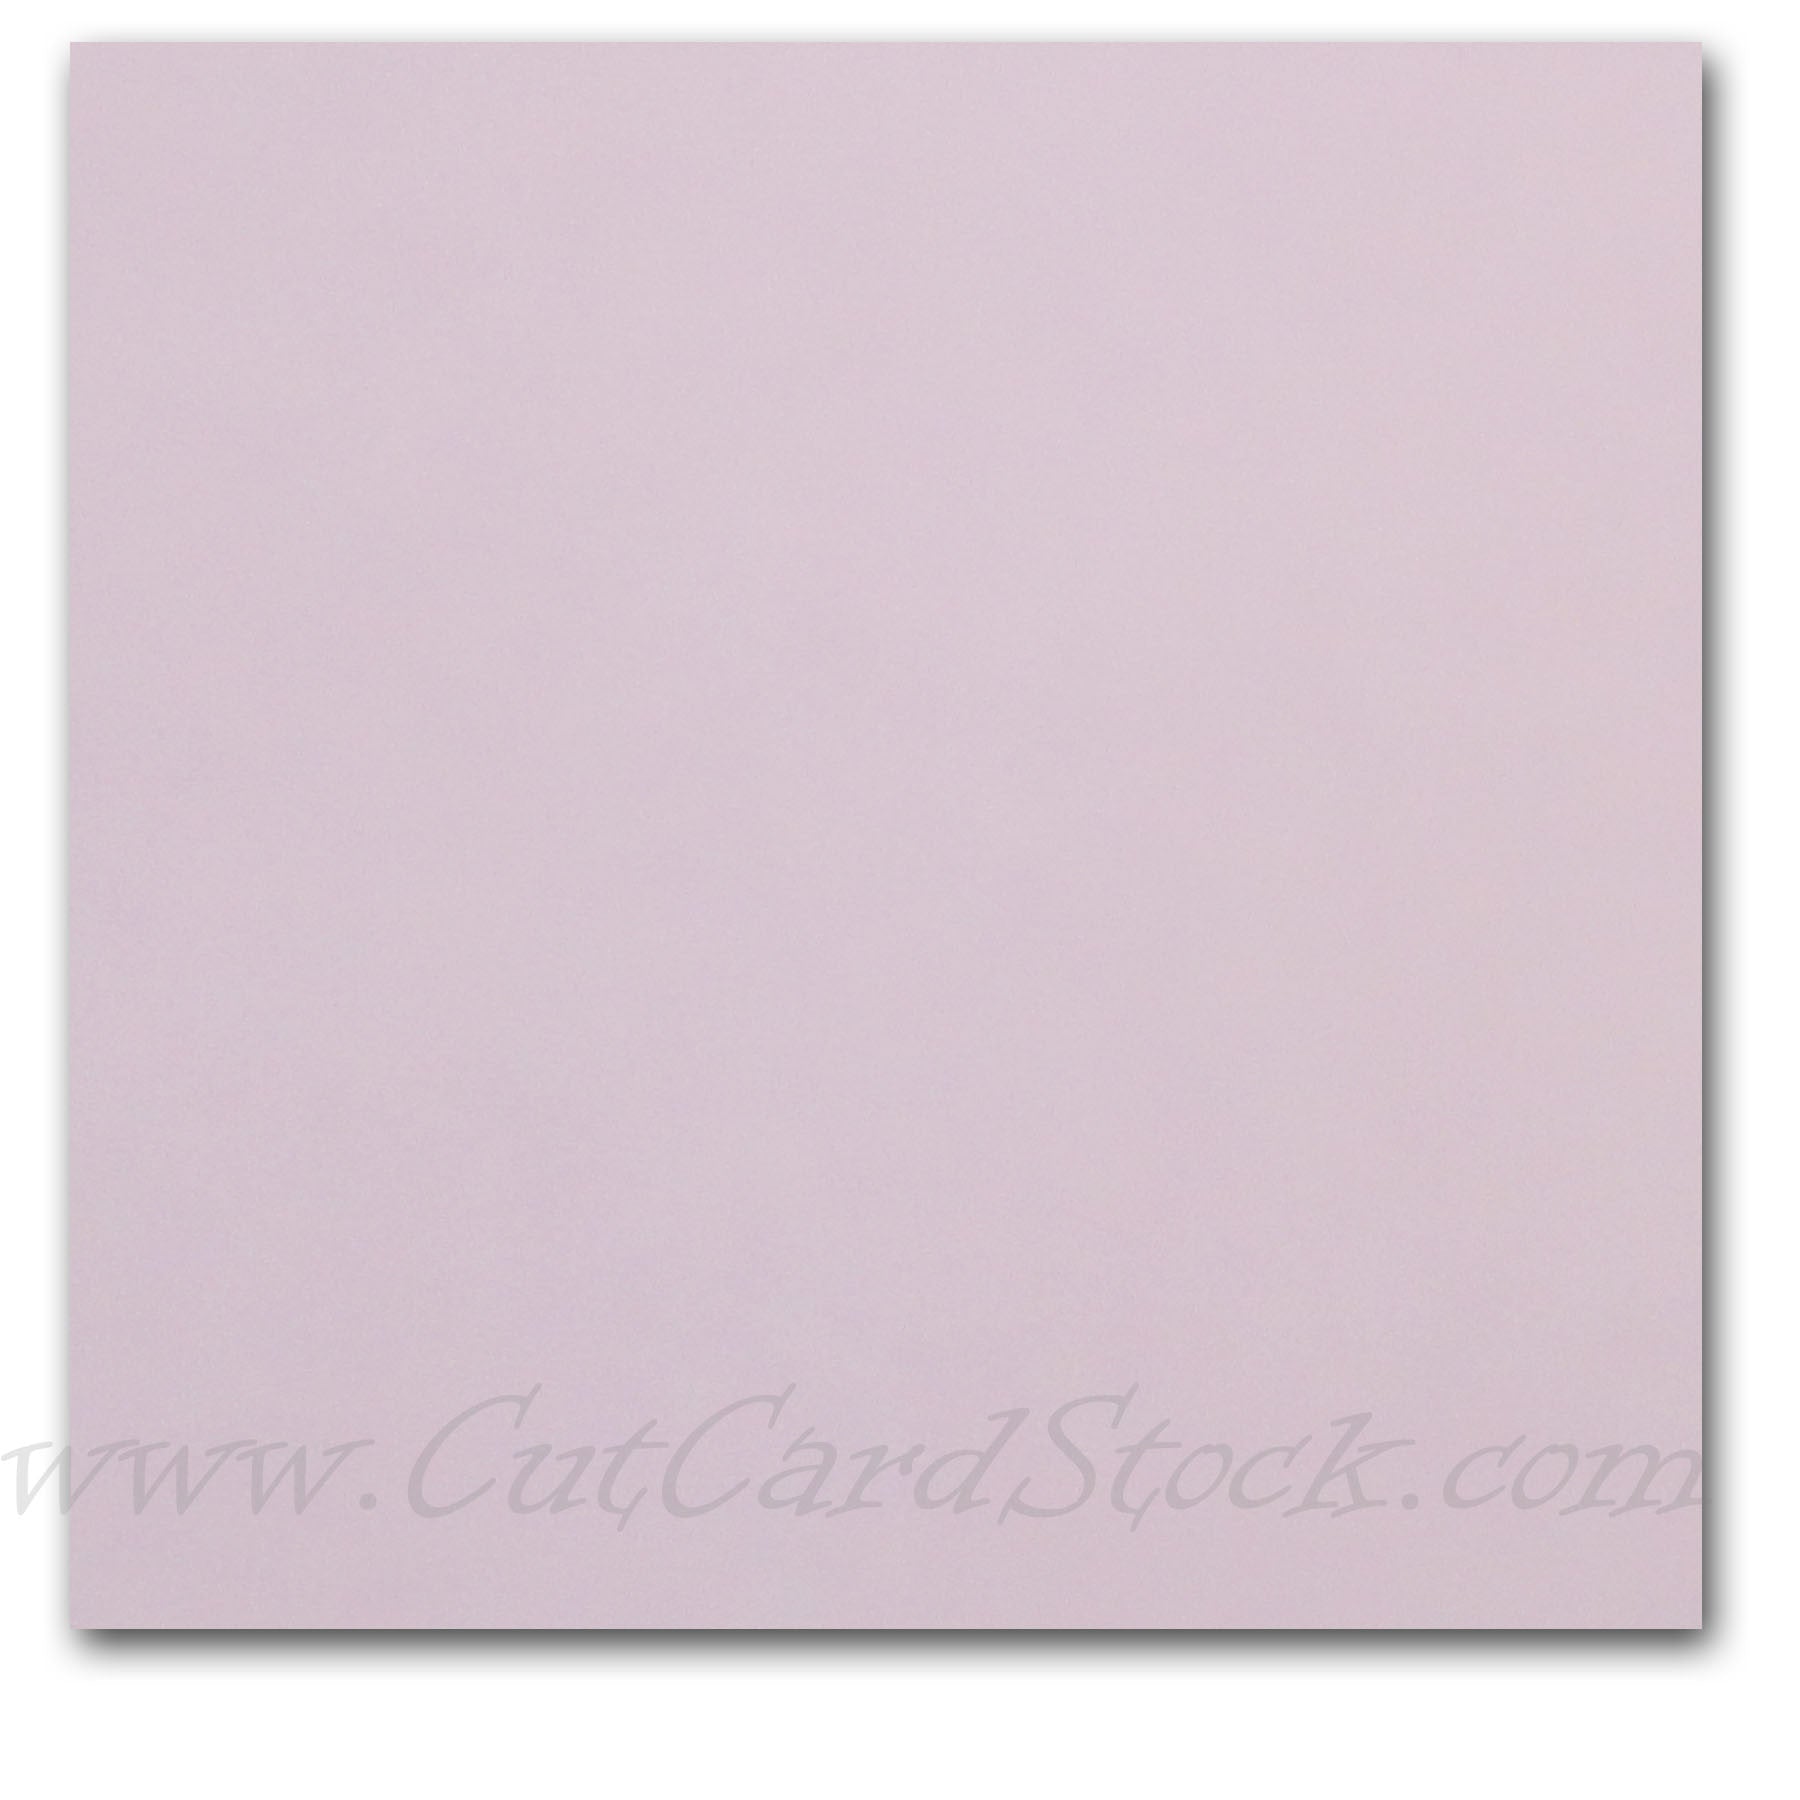 JAM Paper Vellum Bristol 67 lb. Cardstock Paper, 8.5 x 11, Salmon Pink,  50 Sheets/Pack (169832)